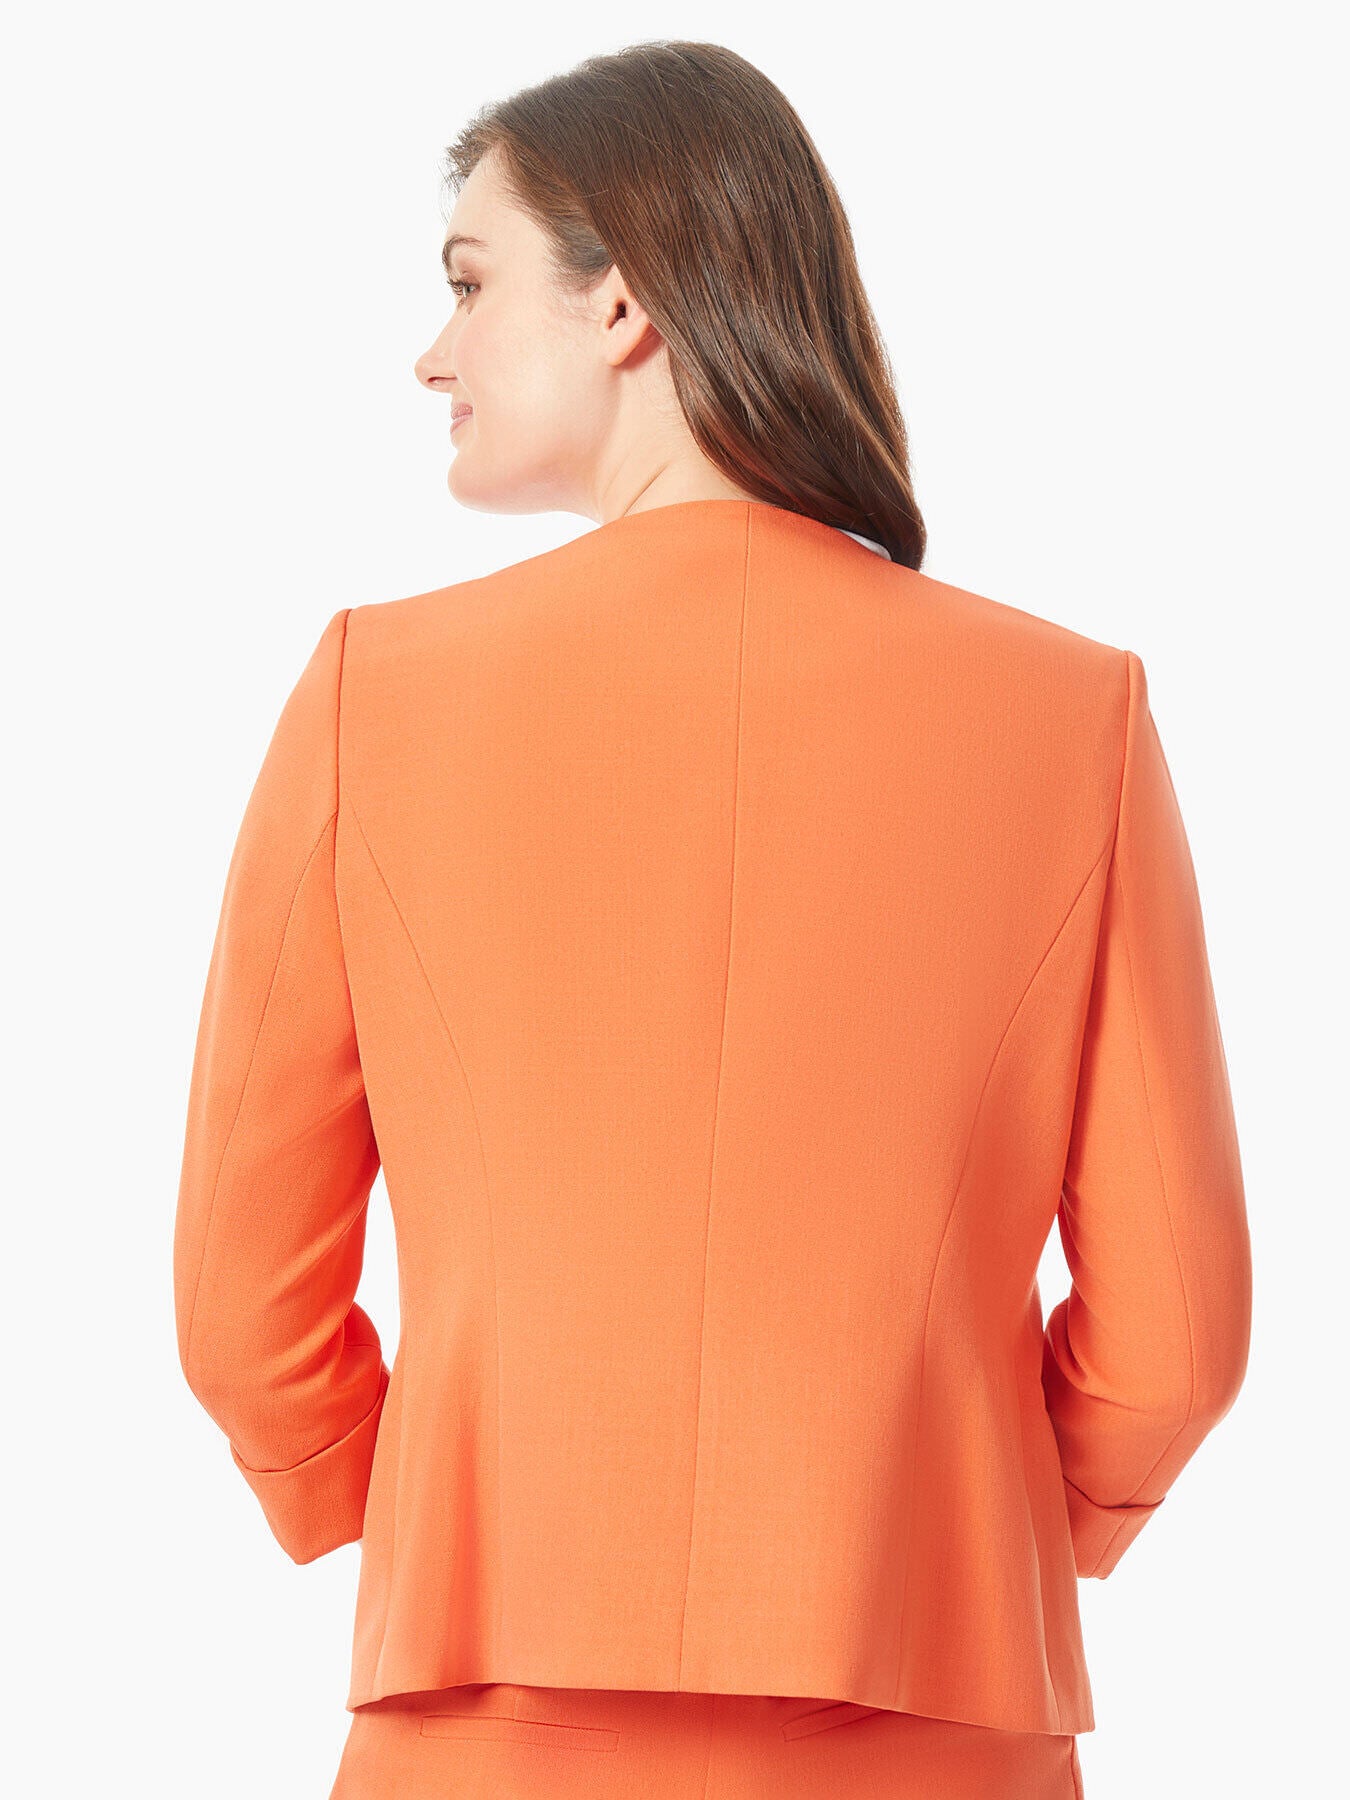 Kasper, Jackets & Coats, Kasper Separates Womens Size 4 Burnt Orange  Blazer Lined Preowned Business